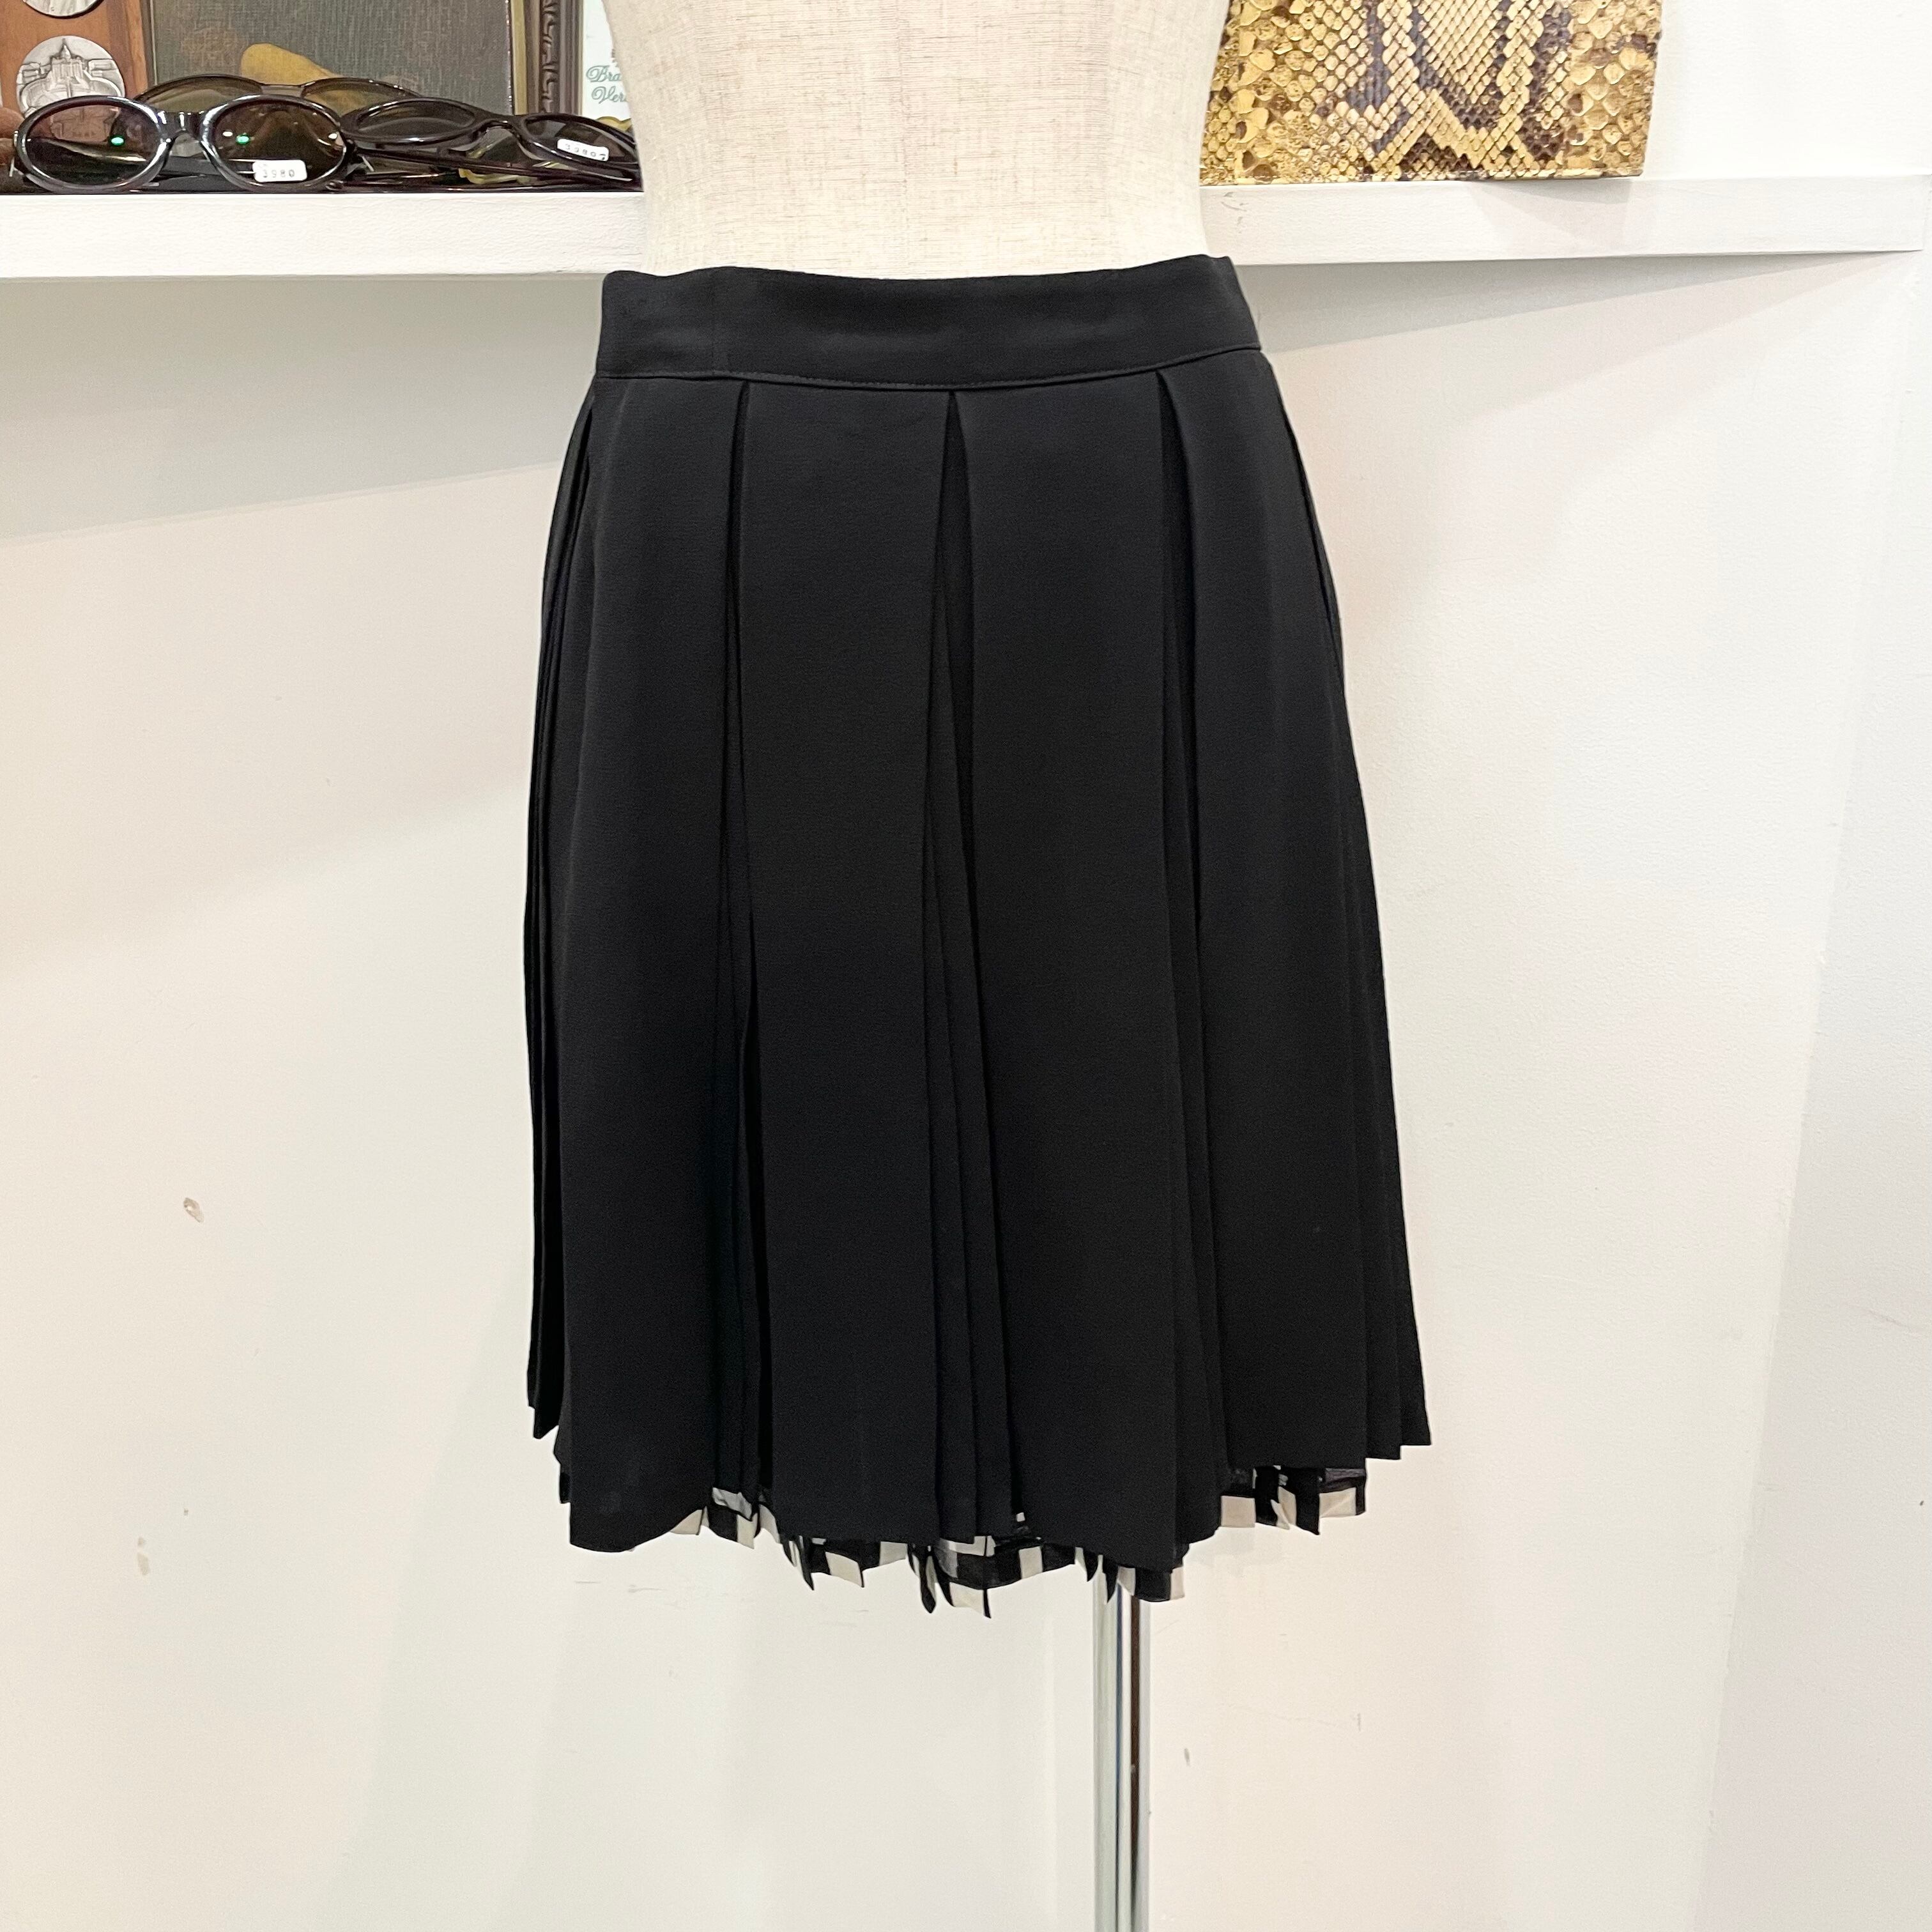 VERSACE/skirt/pleats/black/check/ヴェルサーチ/スカート/プリーツ/黒